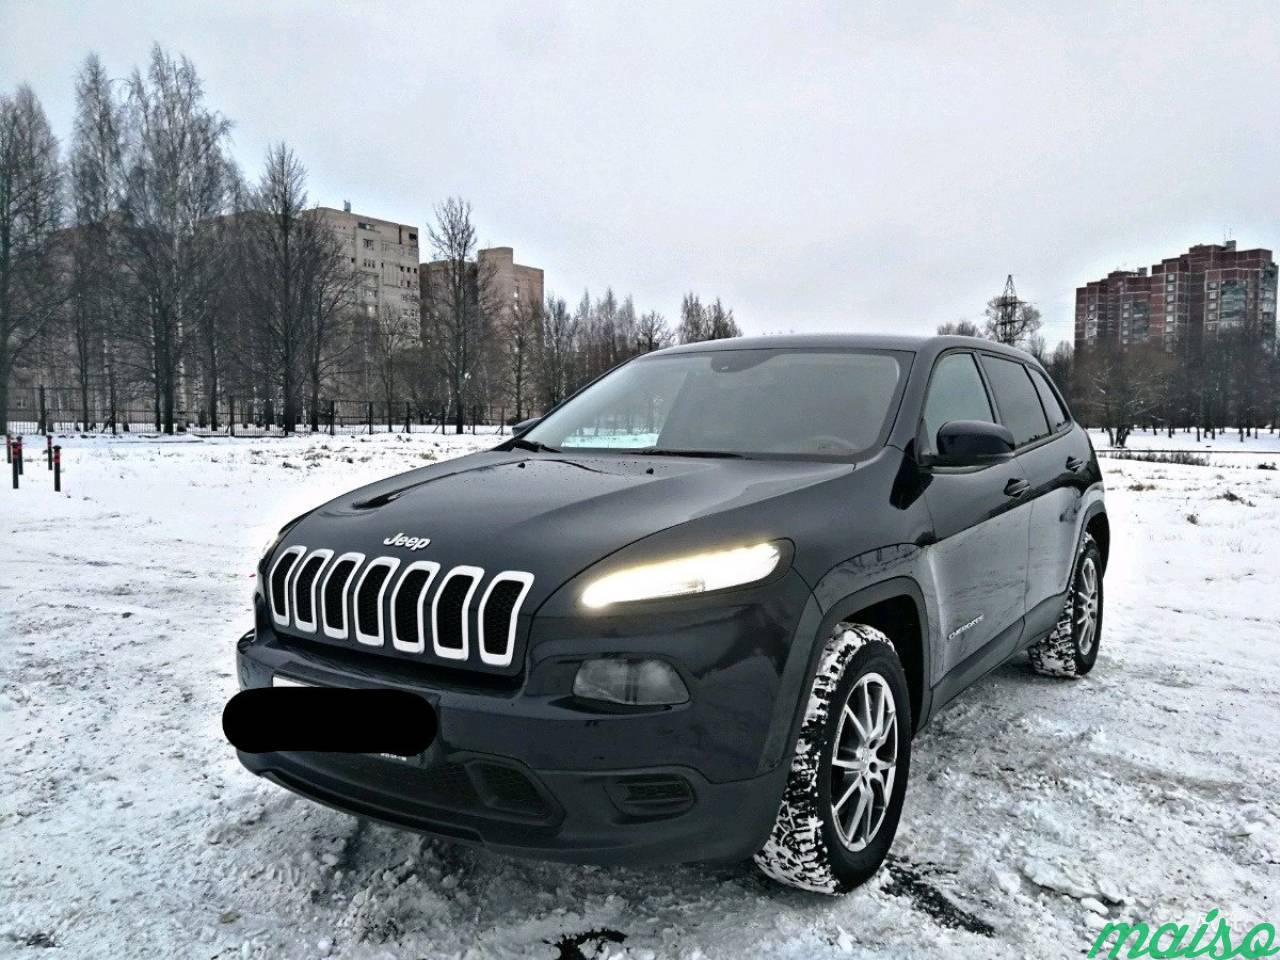 Jeep Cherokee 2.4 AT, 2014, универсал в Санкт-Петербурге. Фото 5